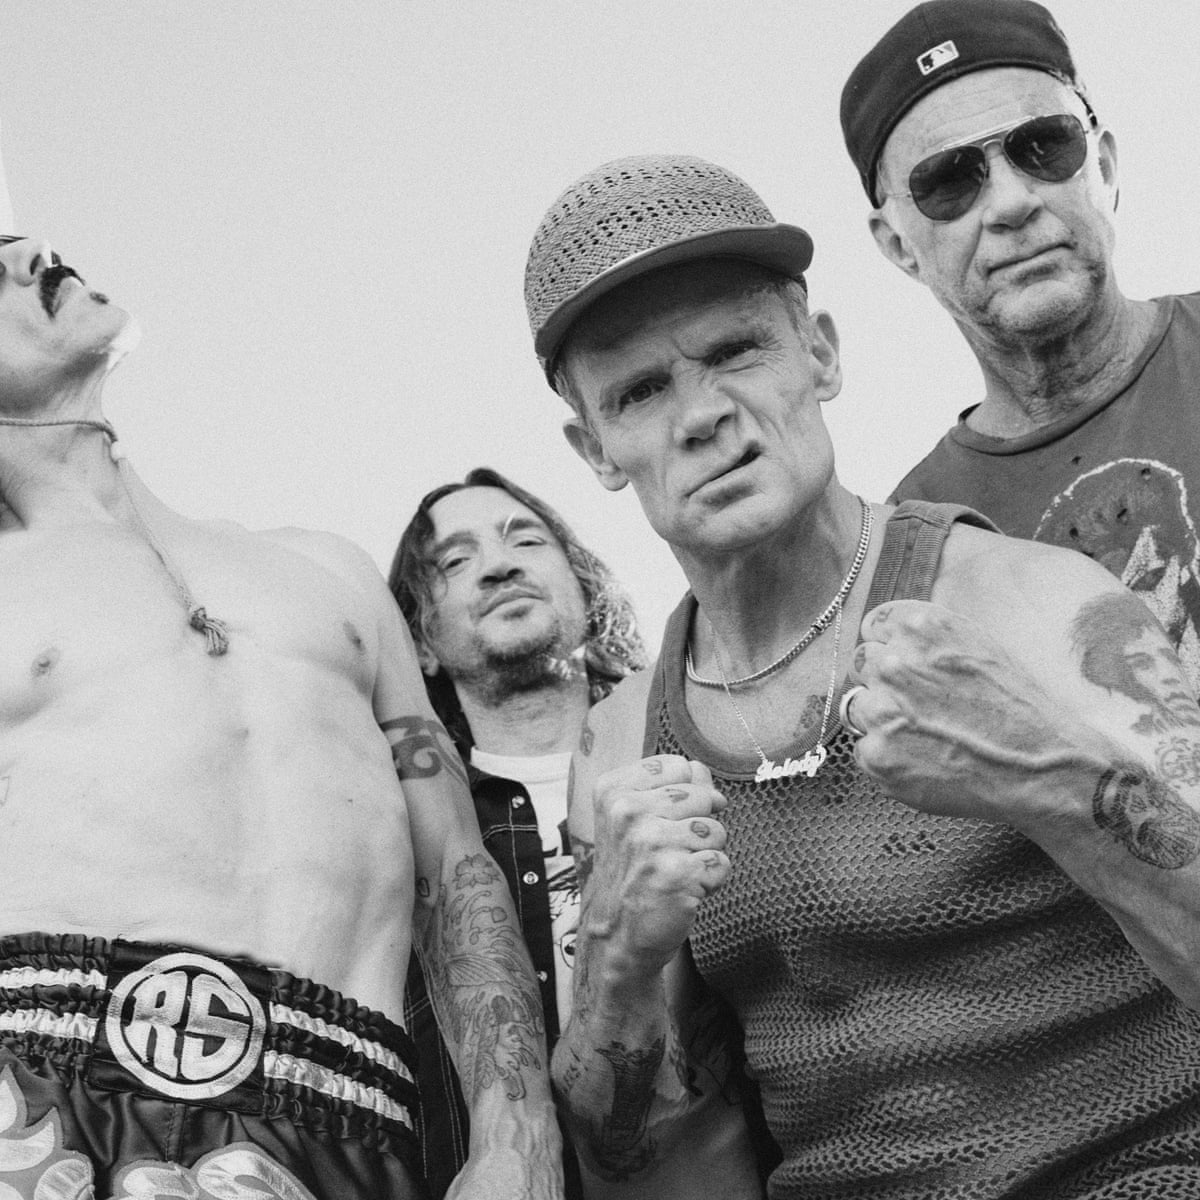 Concert Review: Red Hot Chili Peppers at Levi Stadium, Santa Clara.